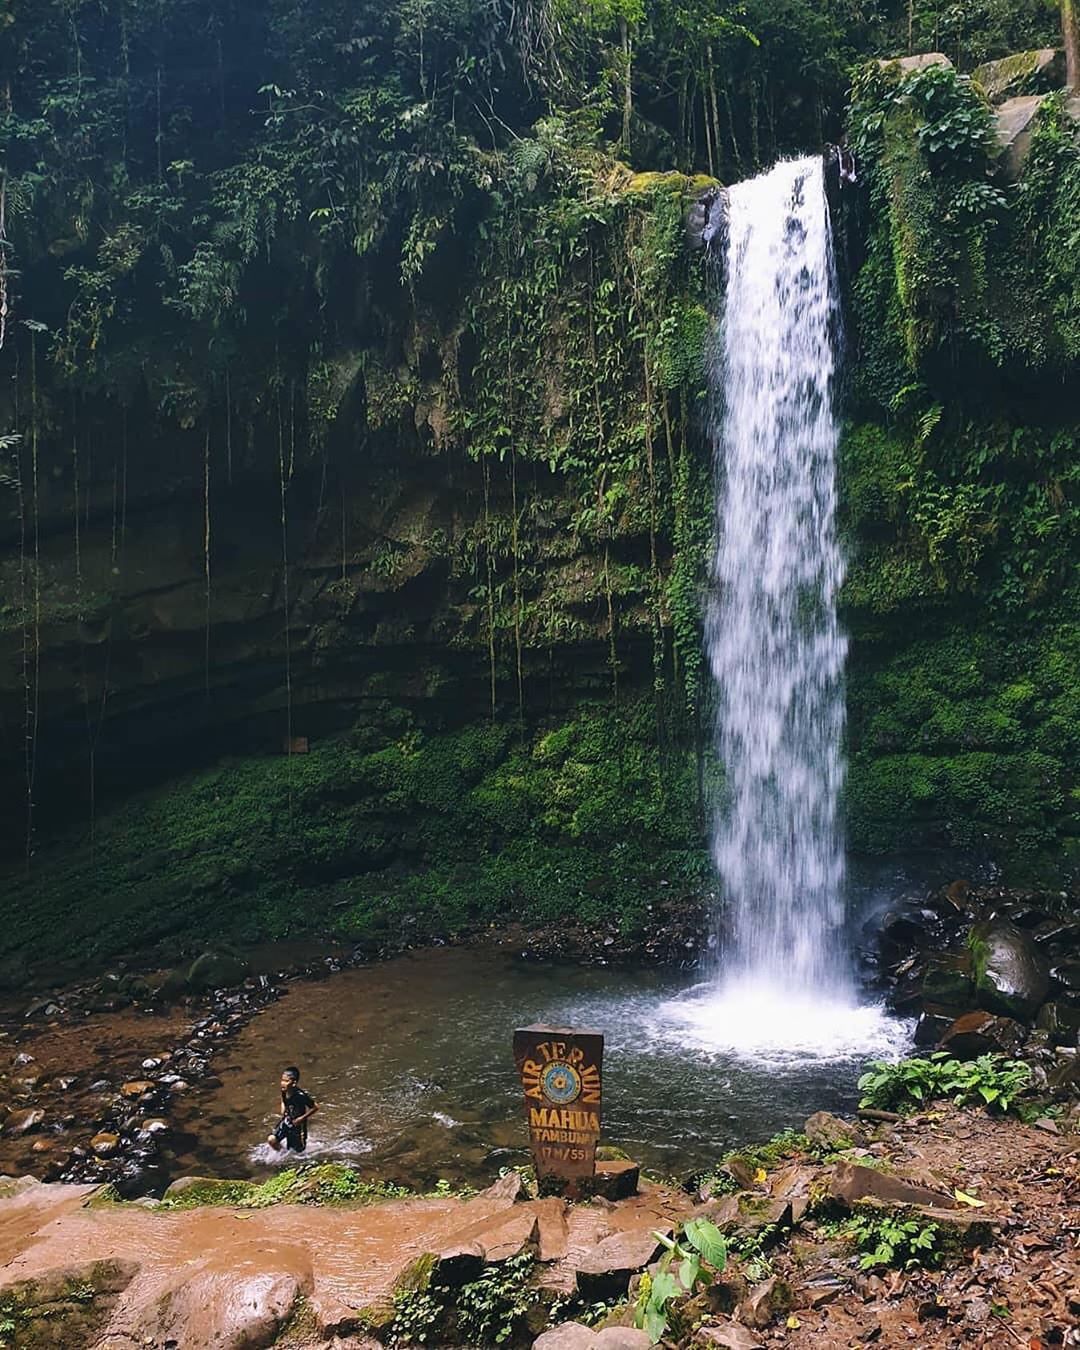 Sabah hiking trails - Mount Alab waterfall